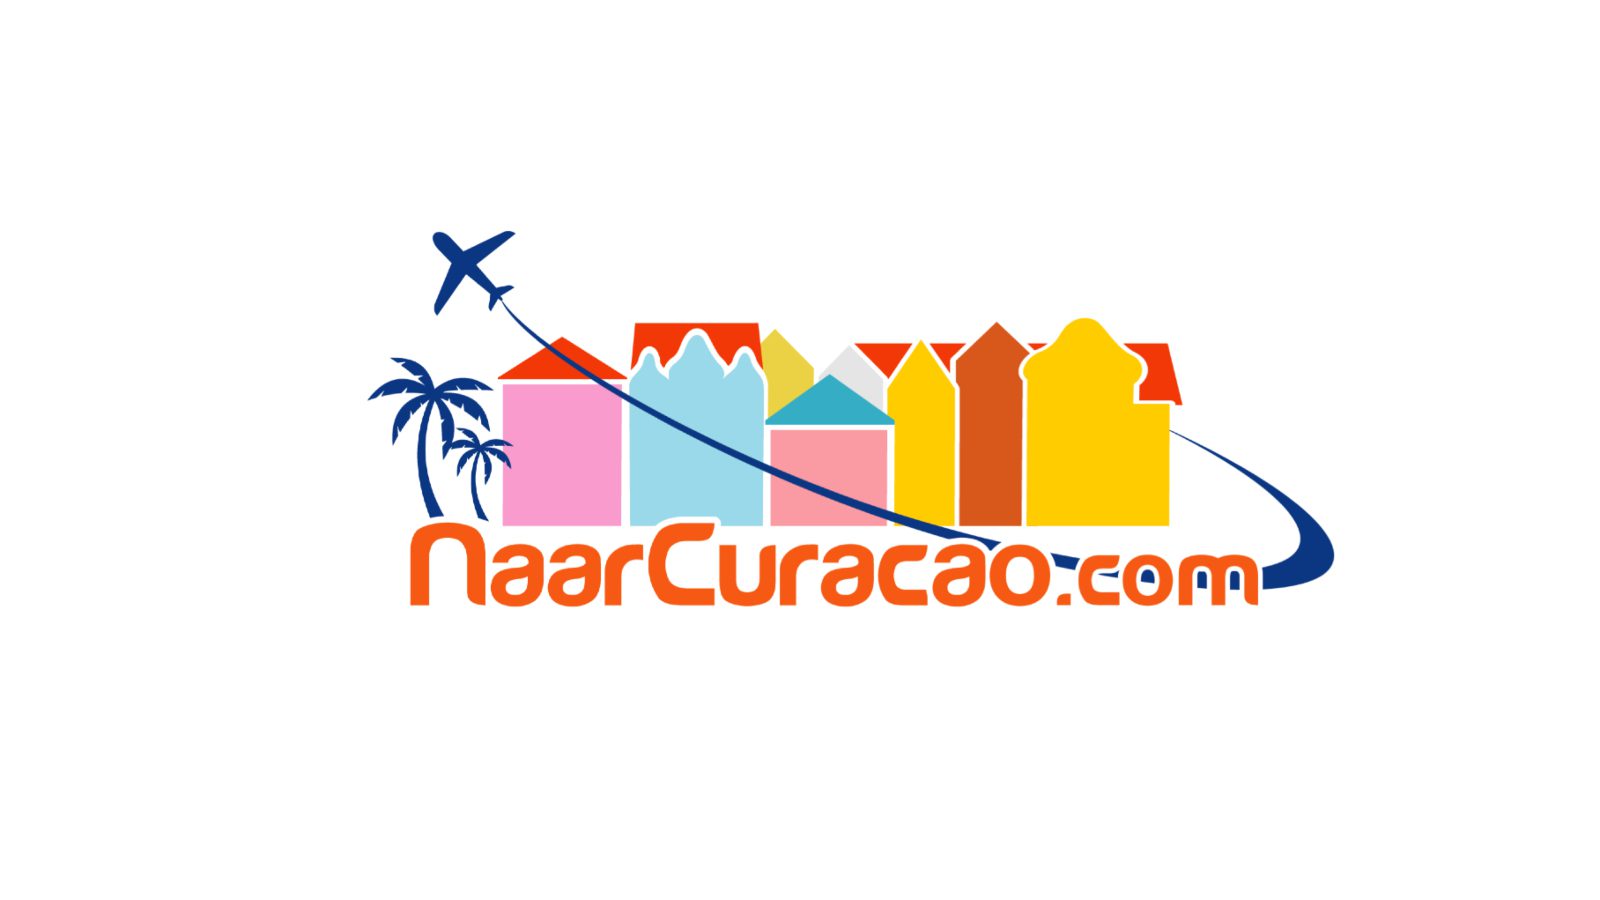 NaarCuracao.com logo